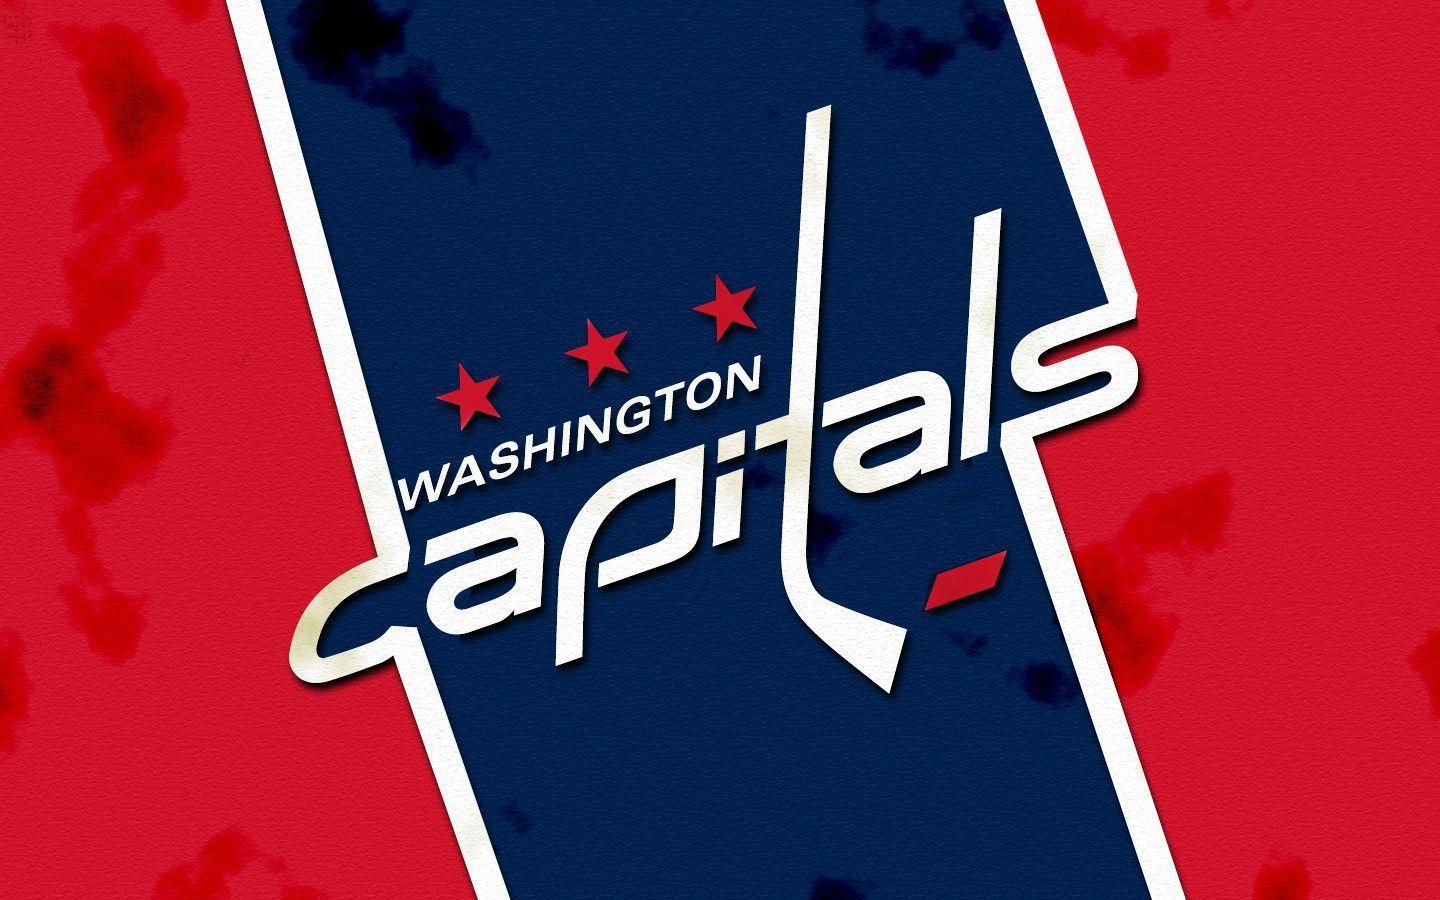 Washington Capitals